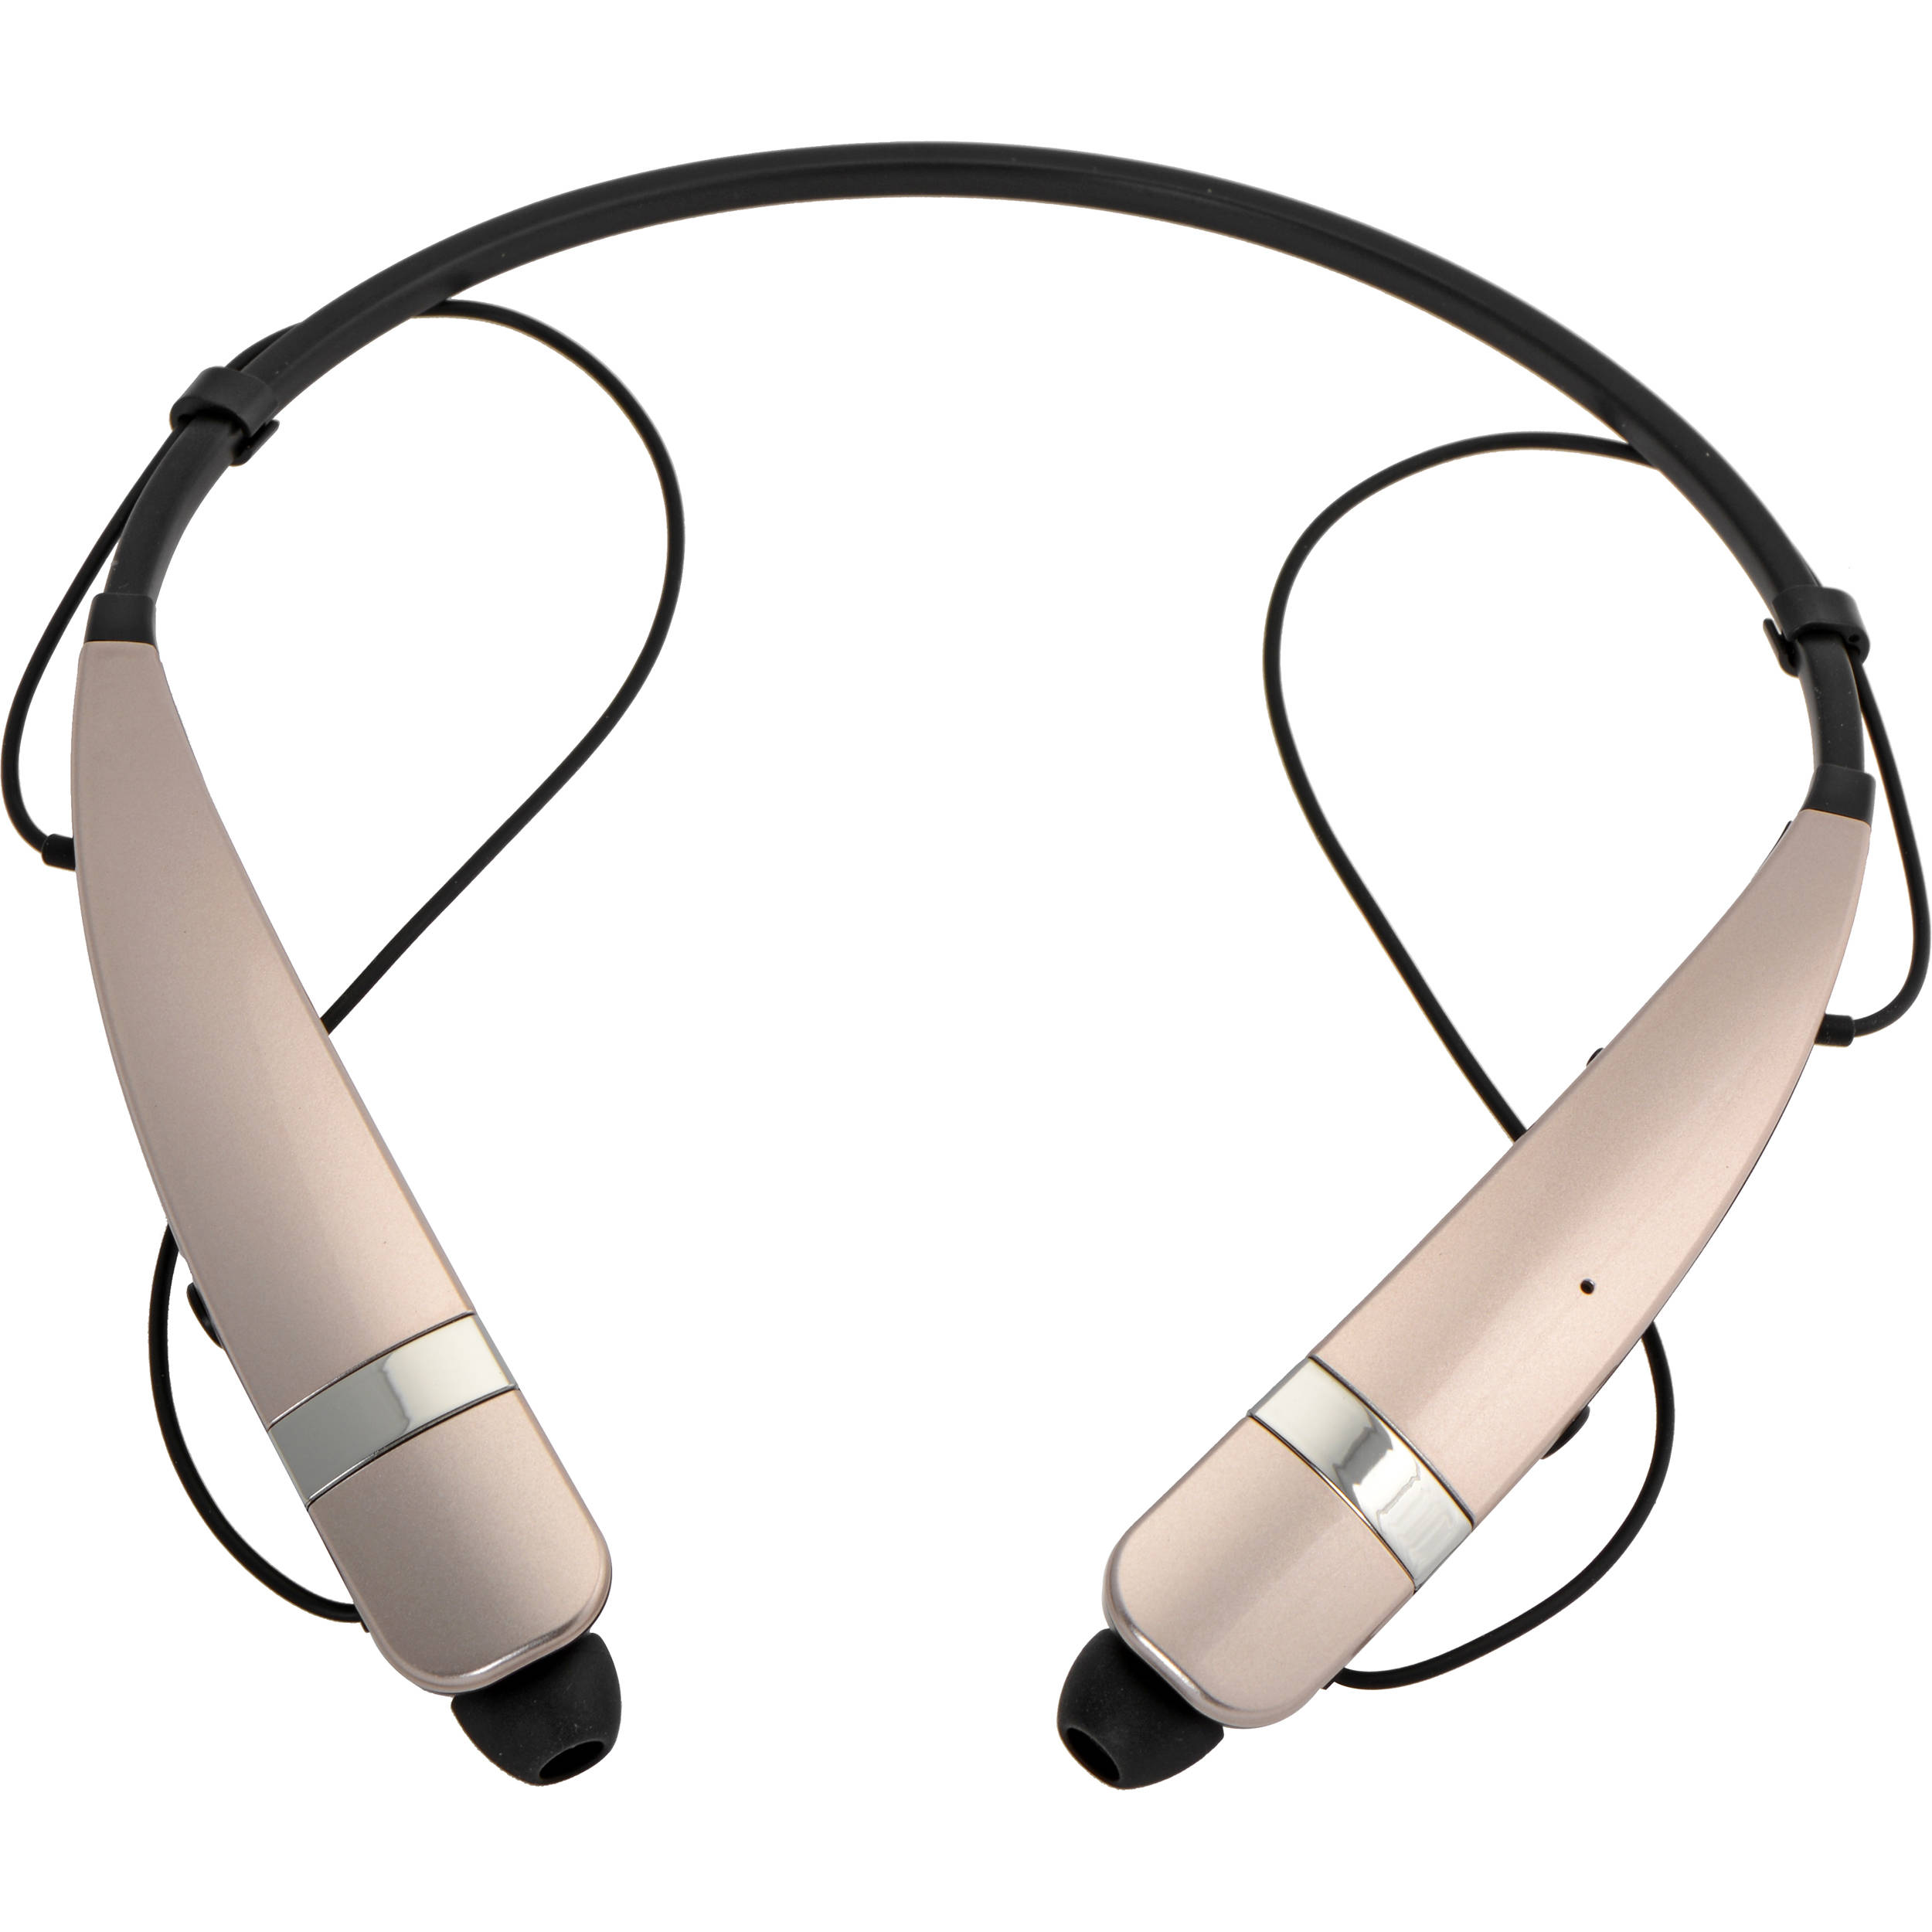 LG Pro Bluetooth Wireless Headset HBS-770